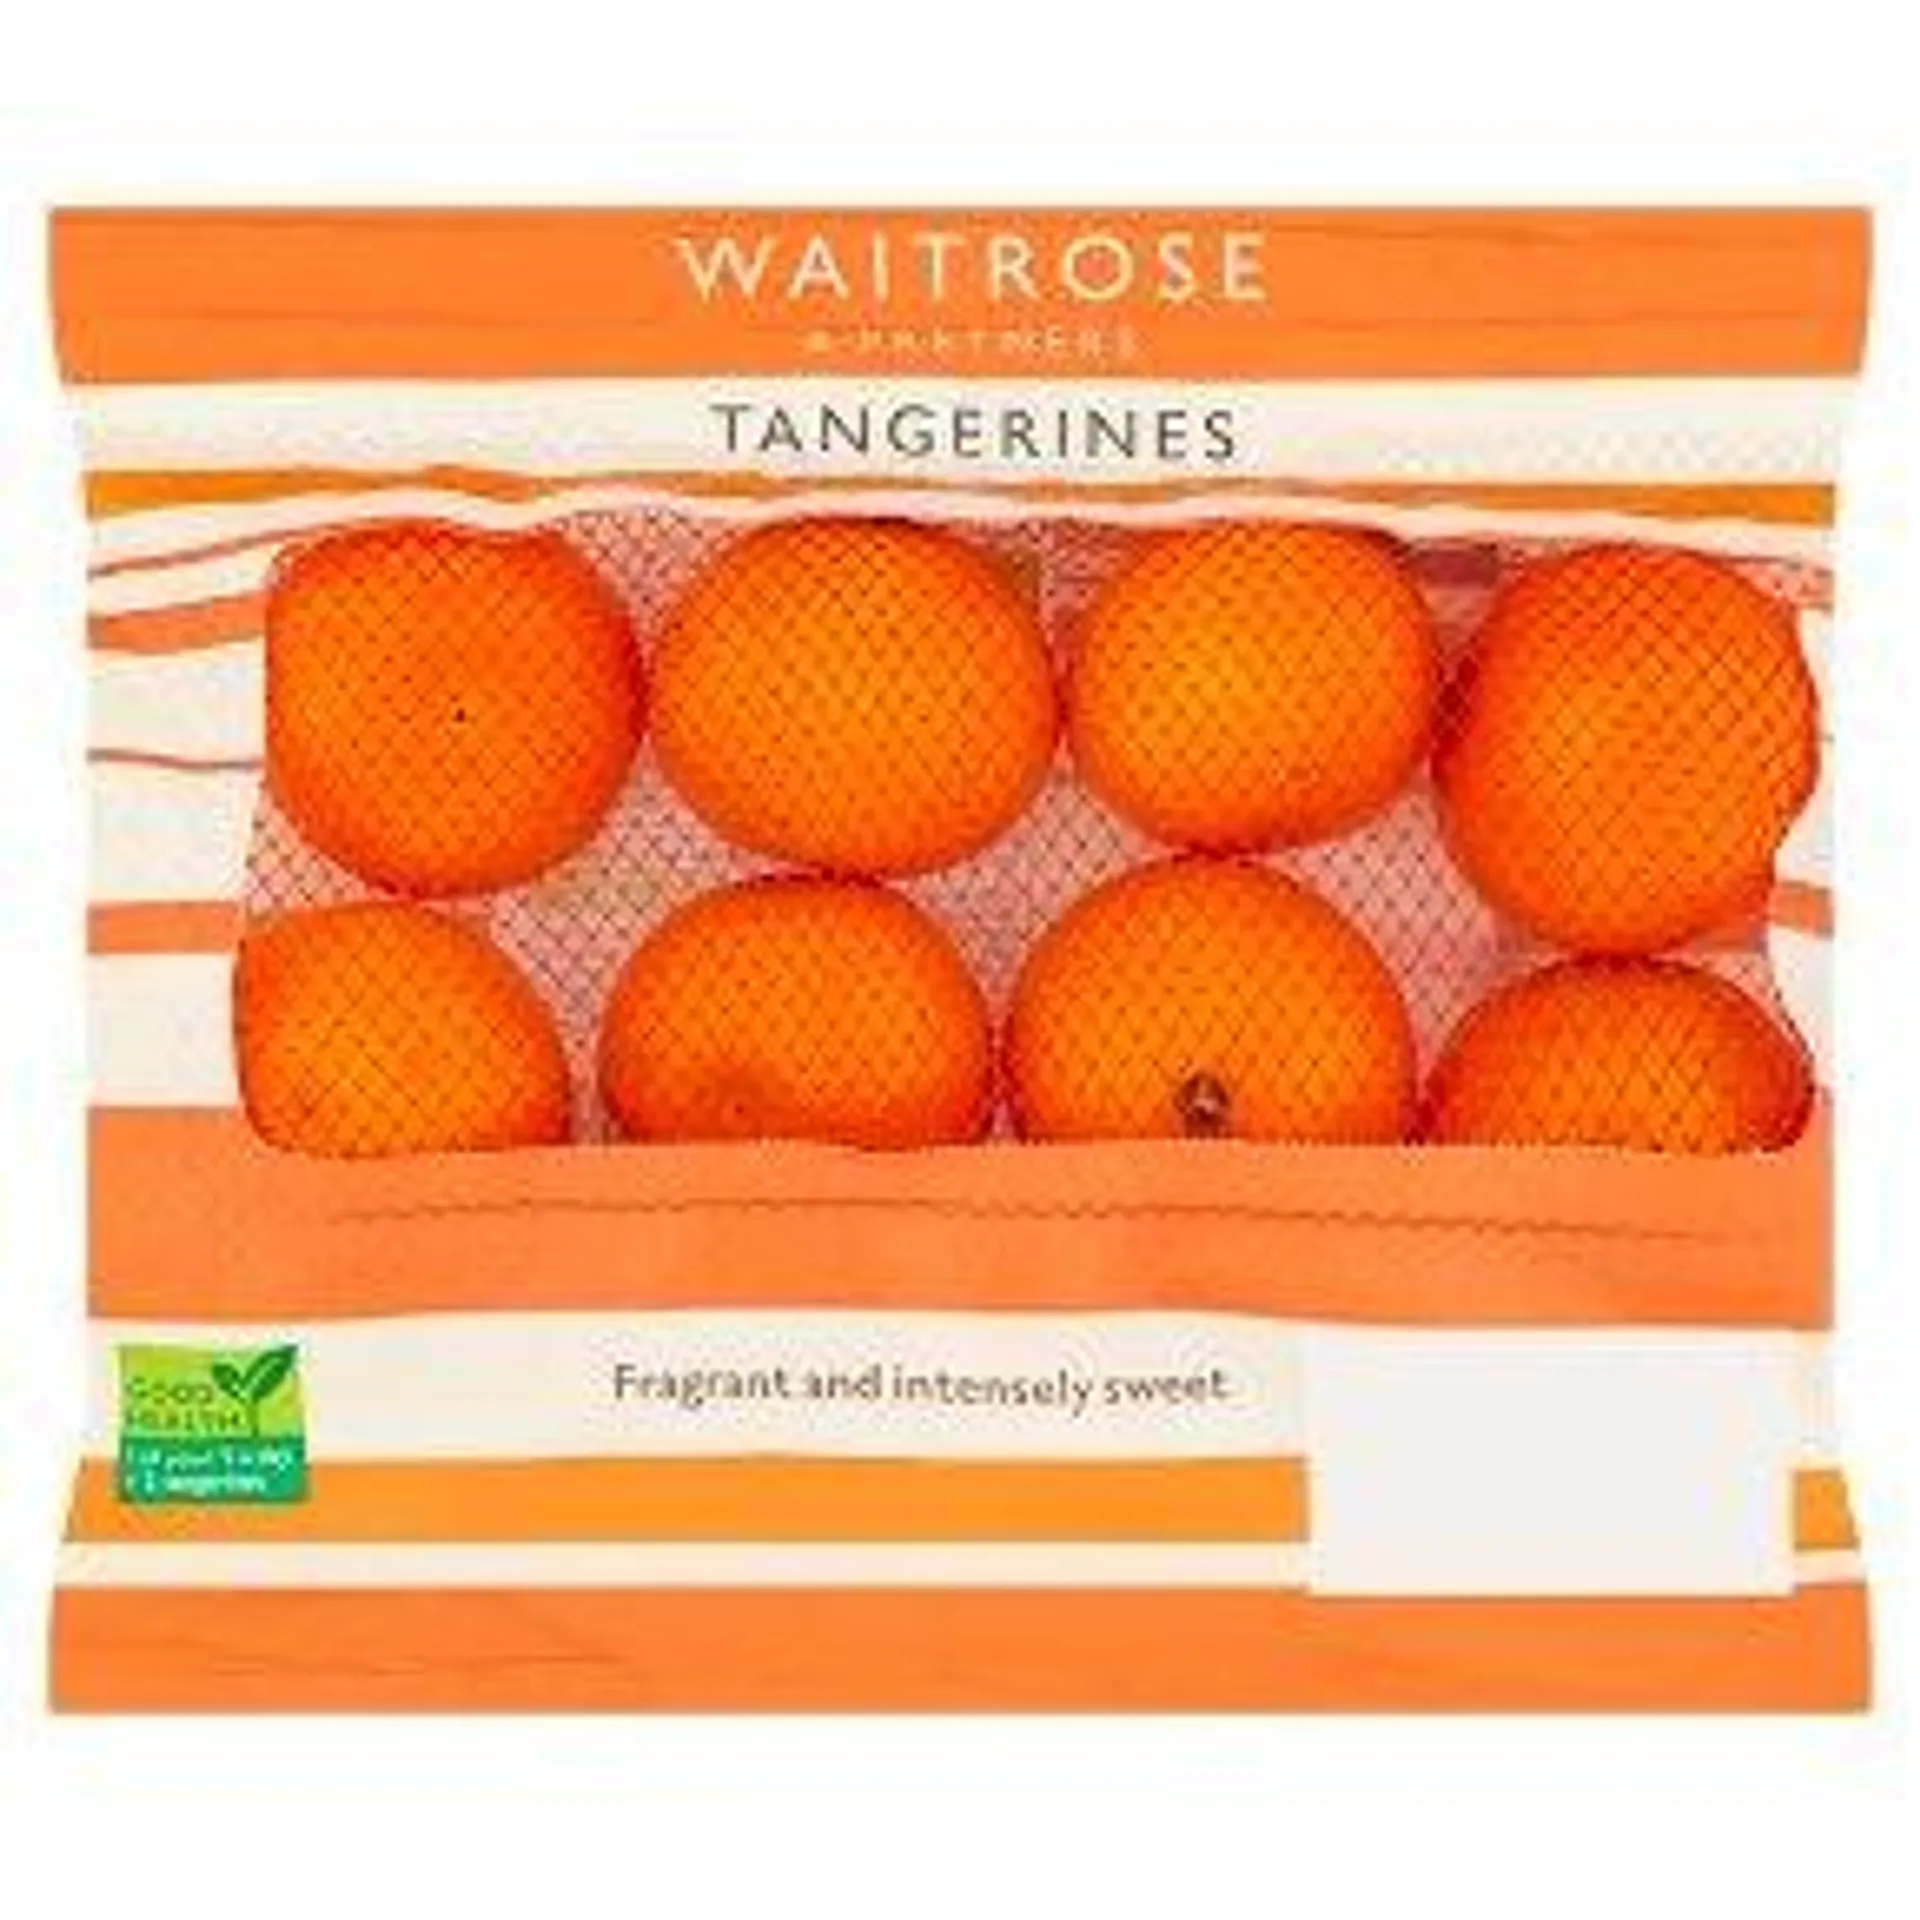 Tangerines 600g